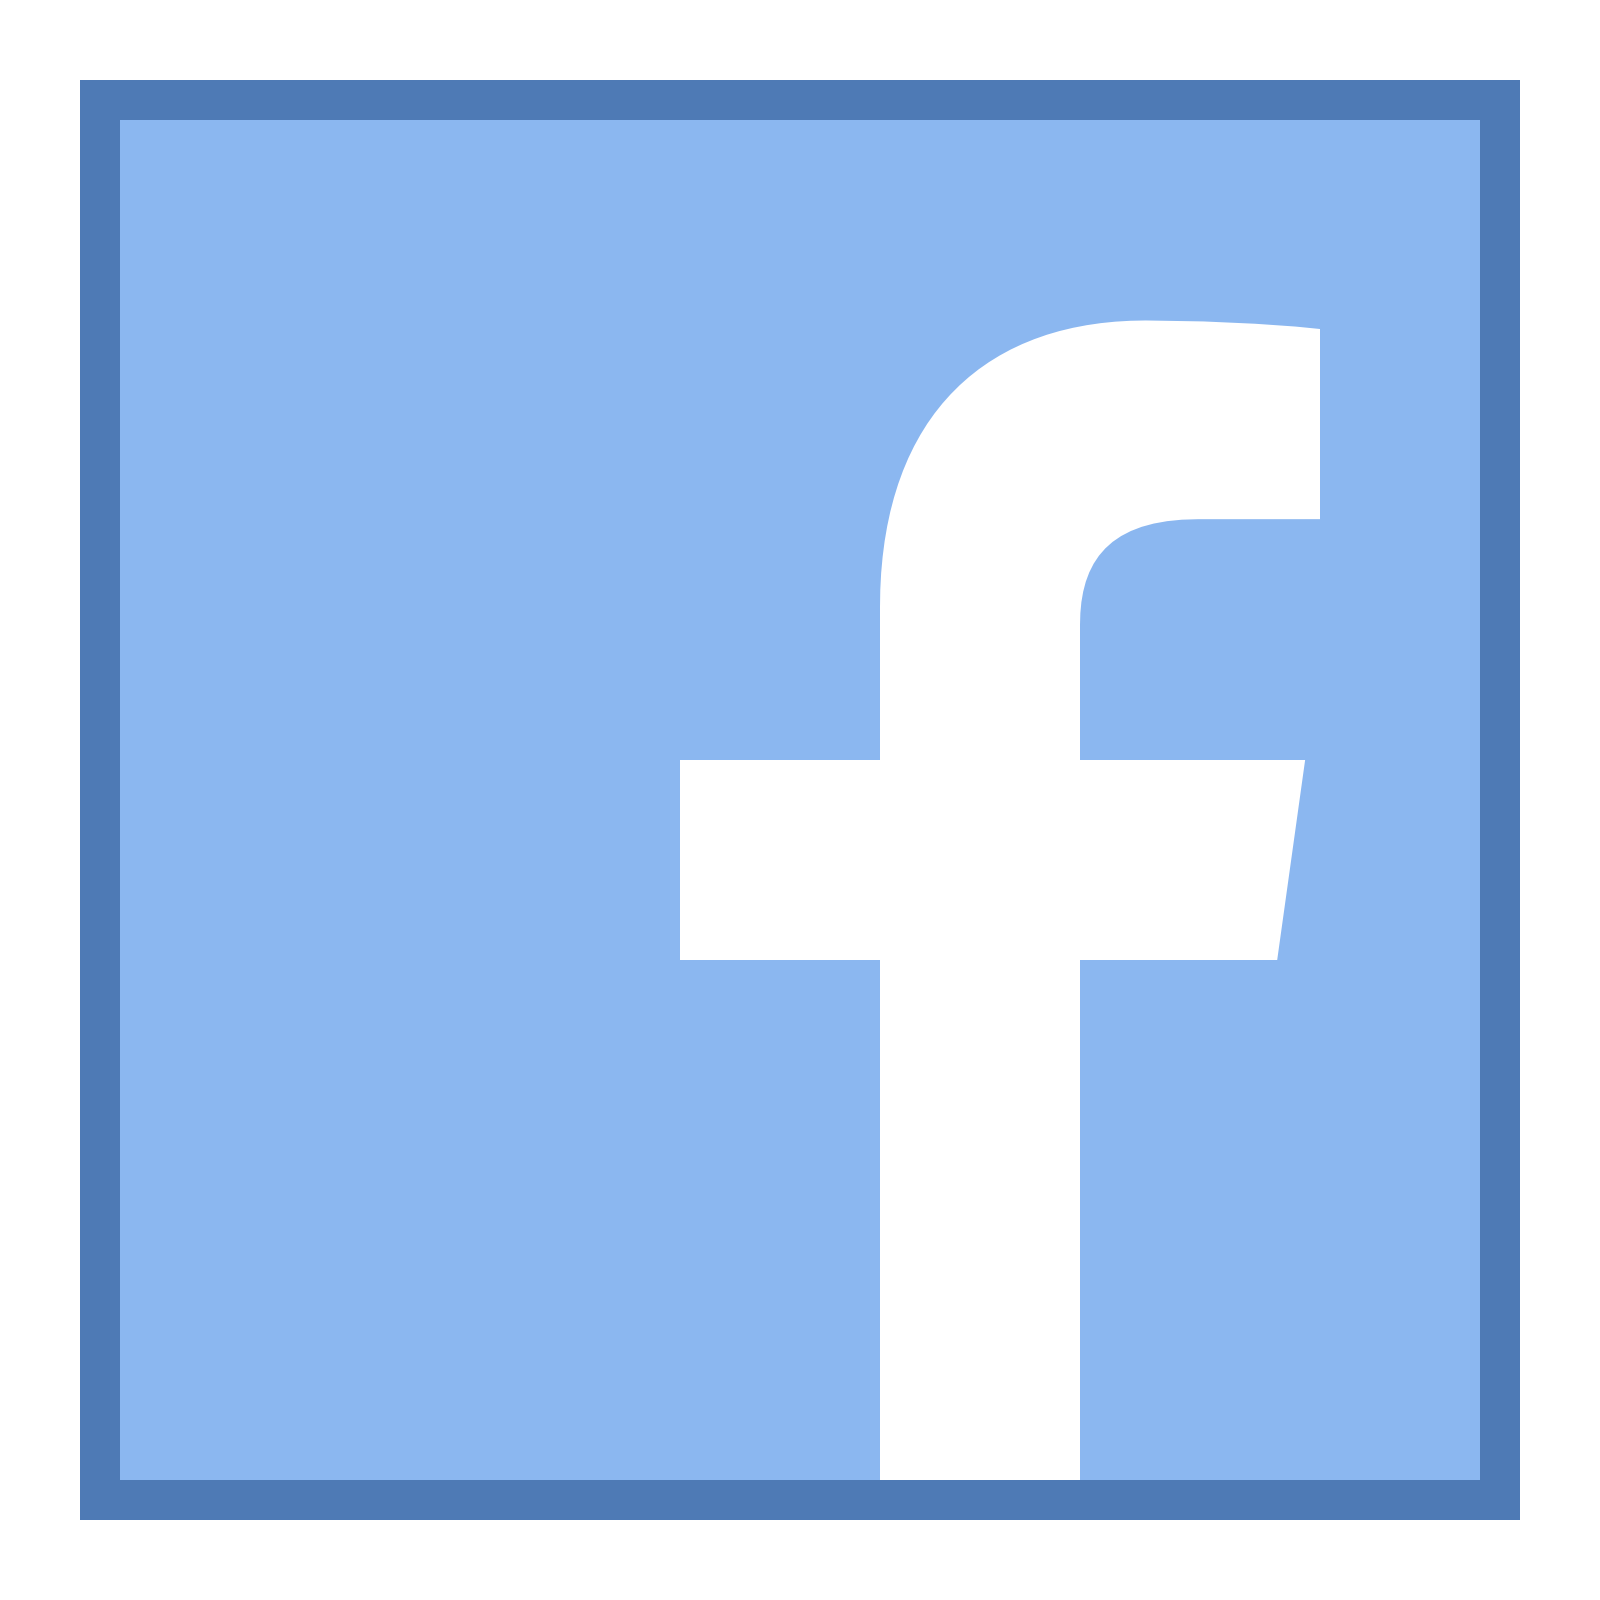 Royal azure blue facebook icon - Free royal azure blue social icons